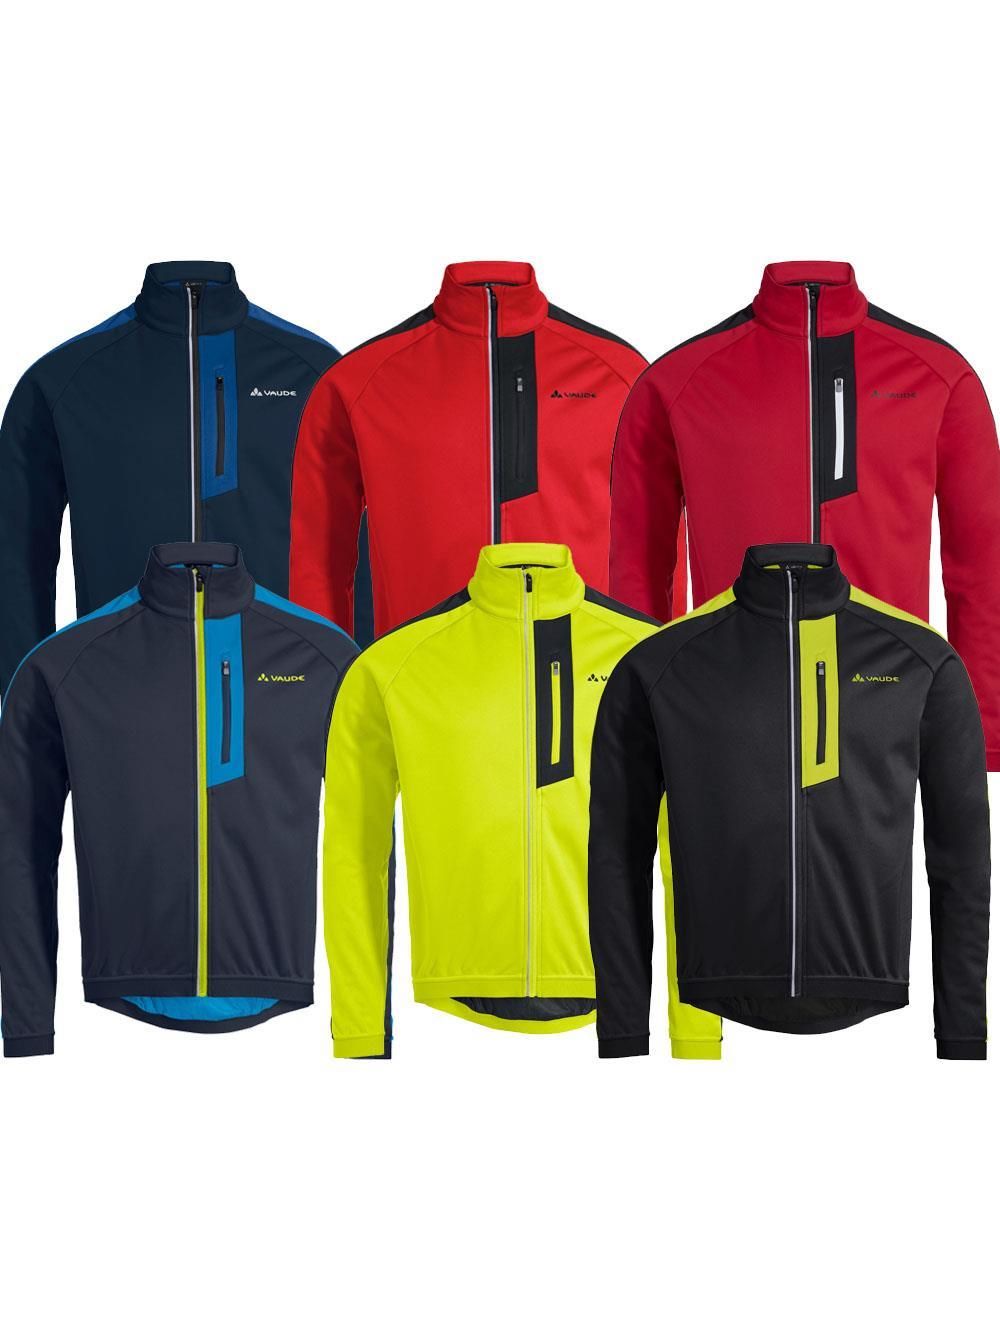 Men's Posta Softshell Cycling Jacket - Black/Chute,Black/Yellow,Bright Red,Navy and Sizes S,M,L,XL,XXL